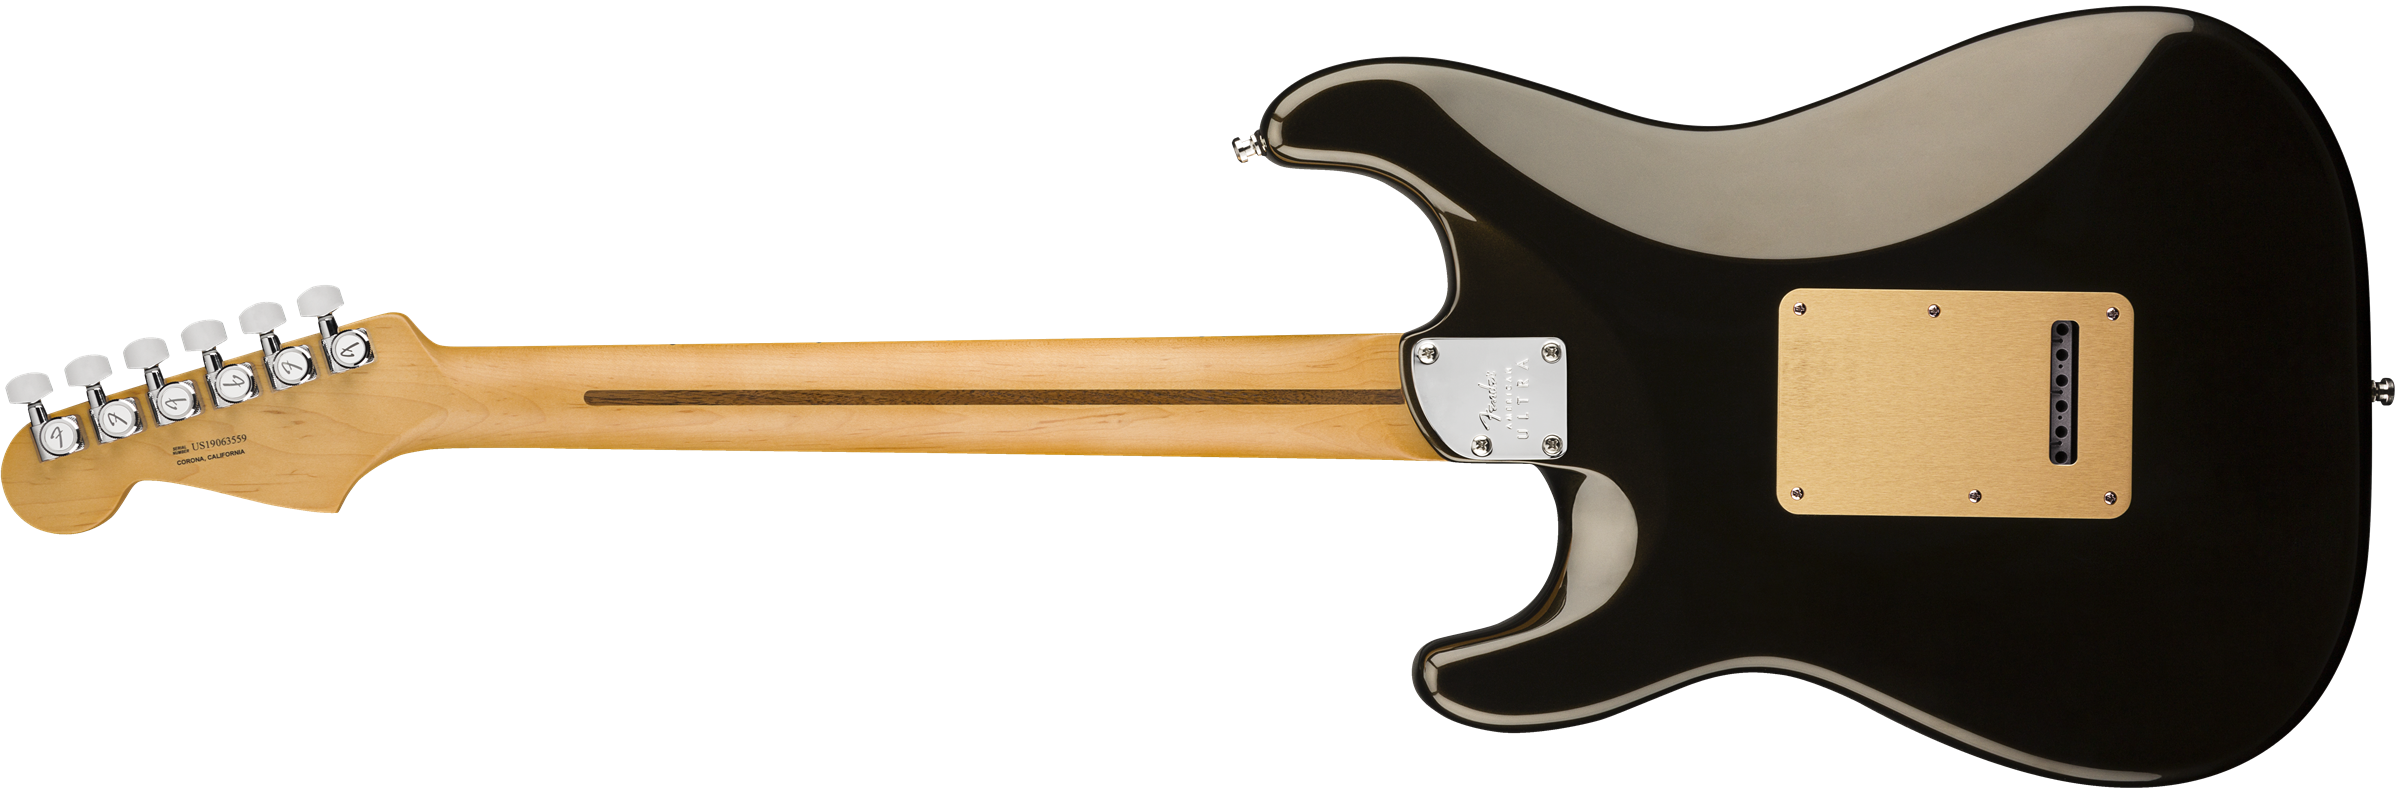 Fender Strat American Ultra Hss 2019 Usa Mn - Texas Tea - Str shape electric guitar - Variation 2